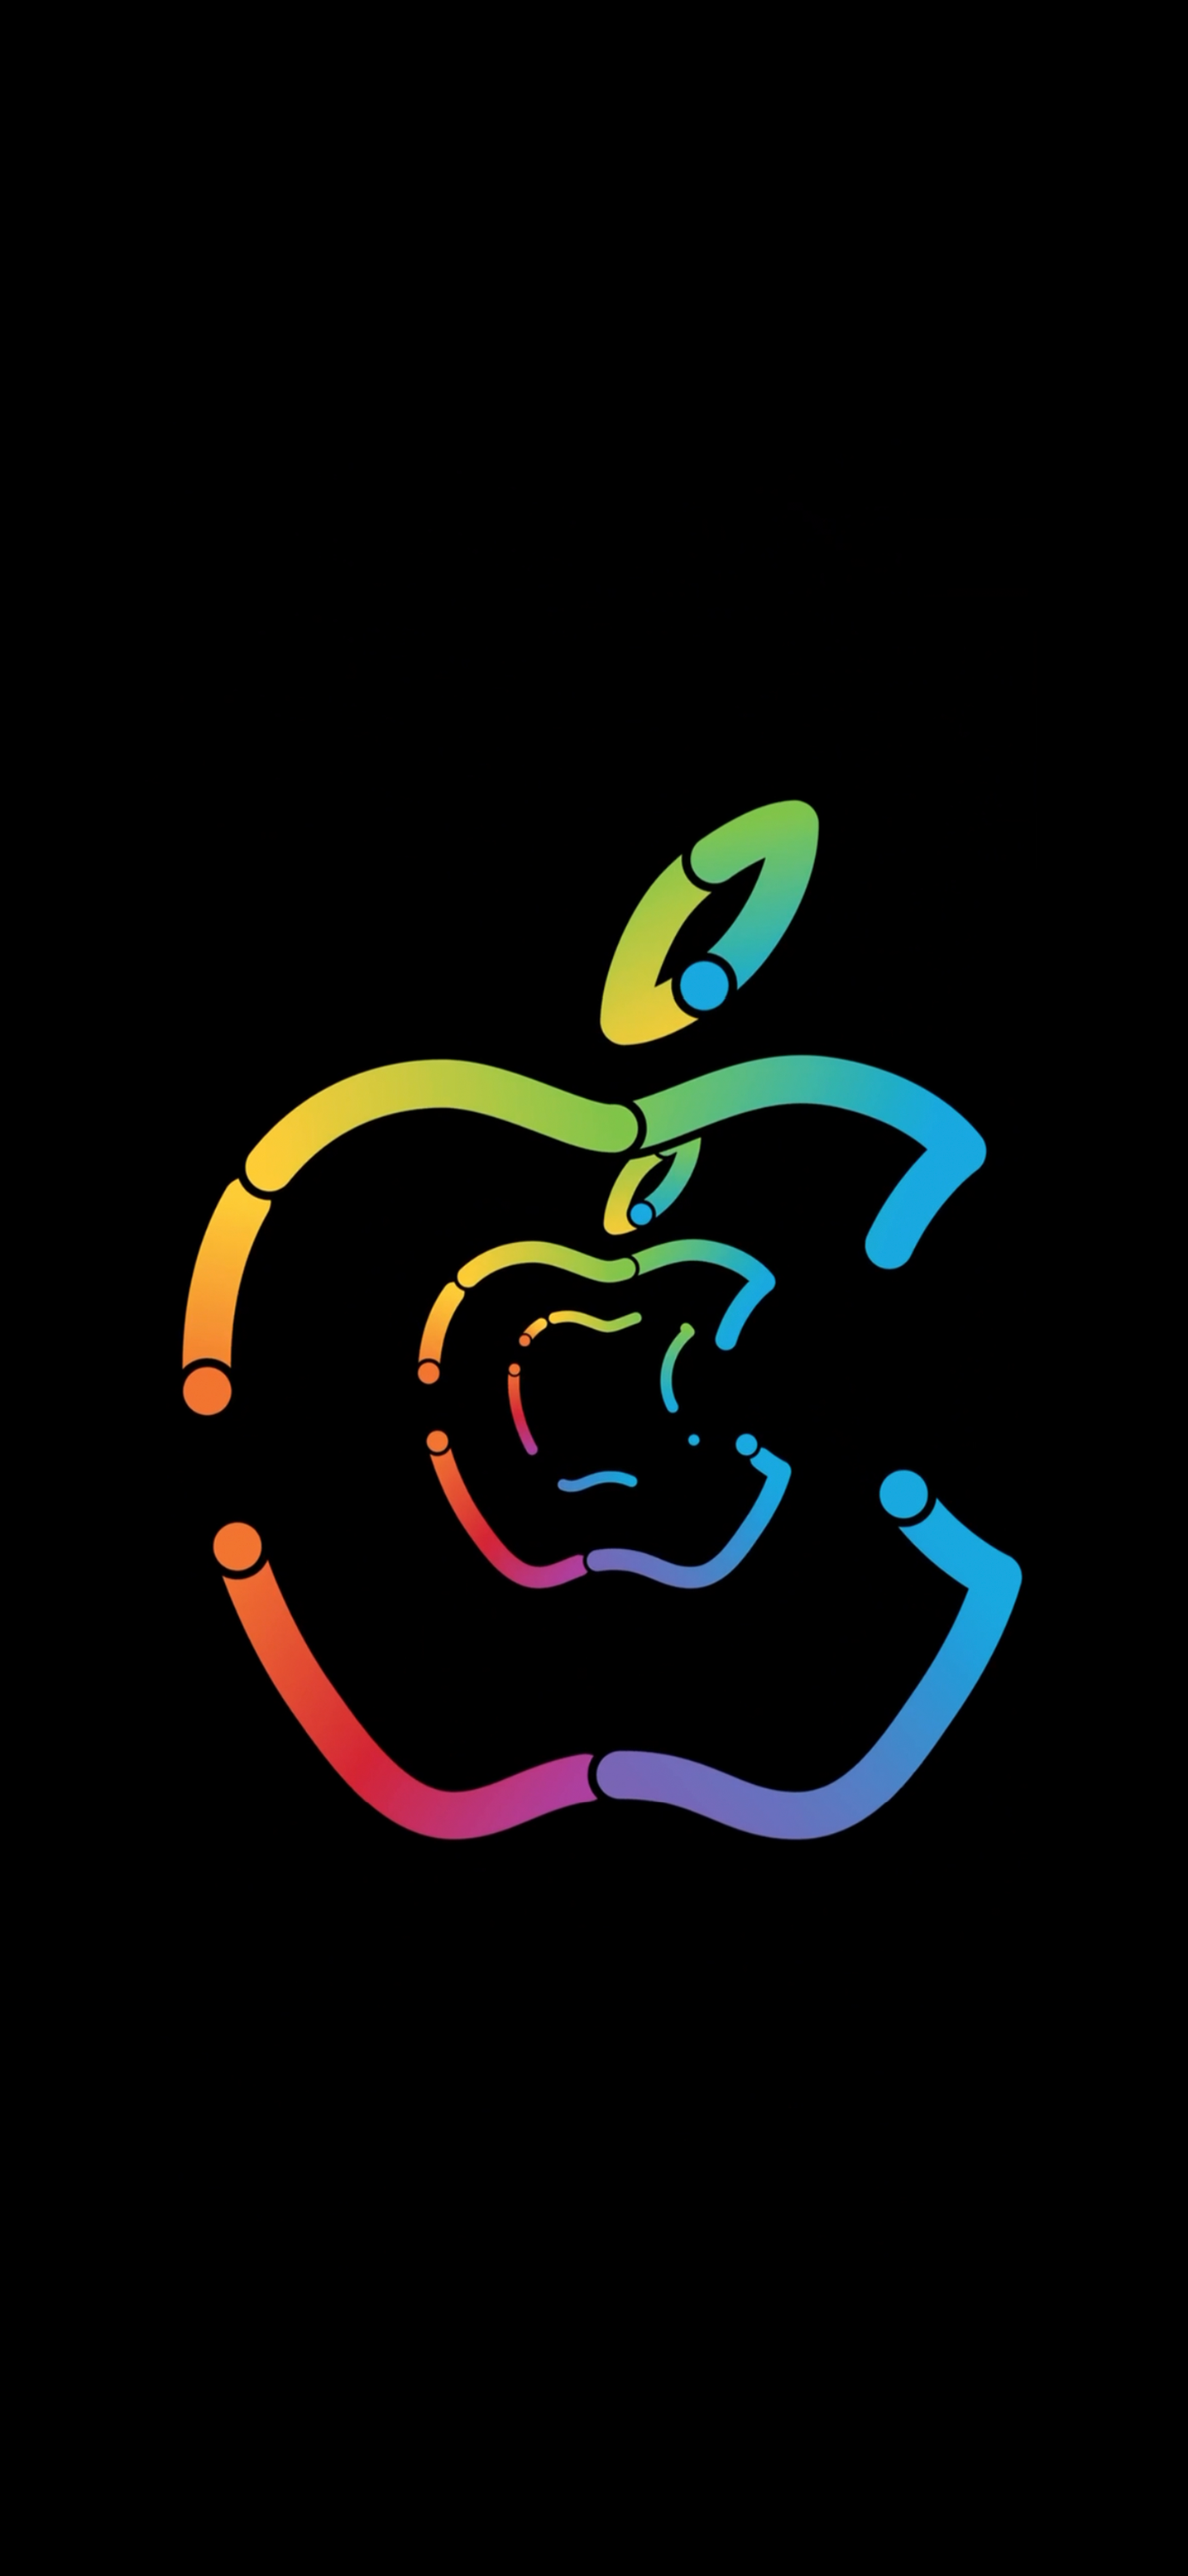 Wallpaper Weekends: Apple Logo iPhone Wallpaper